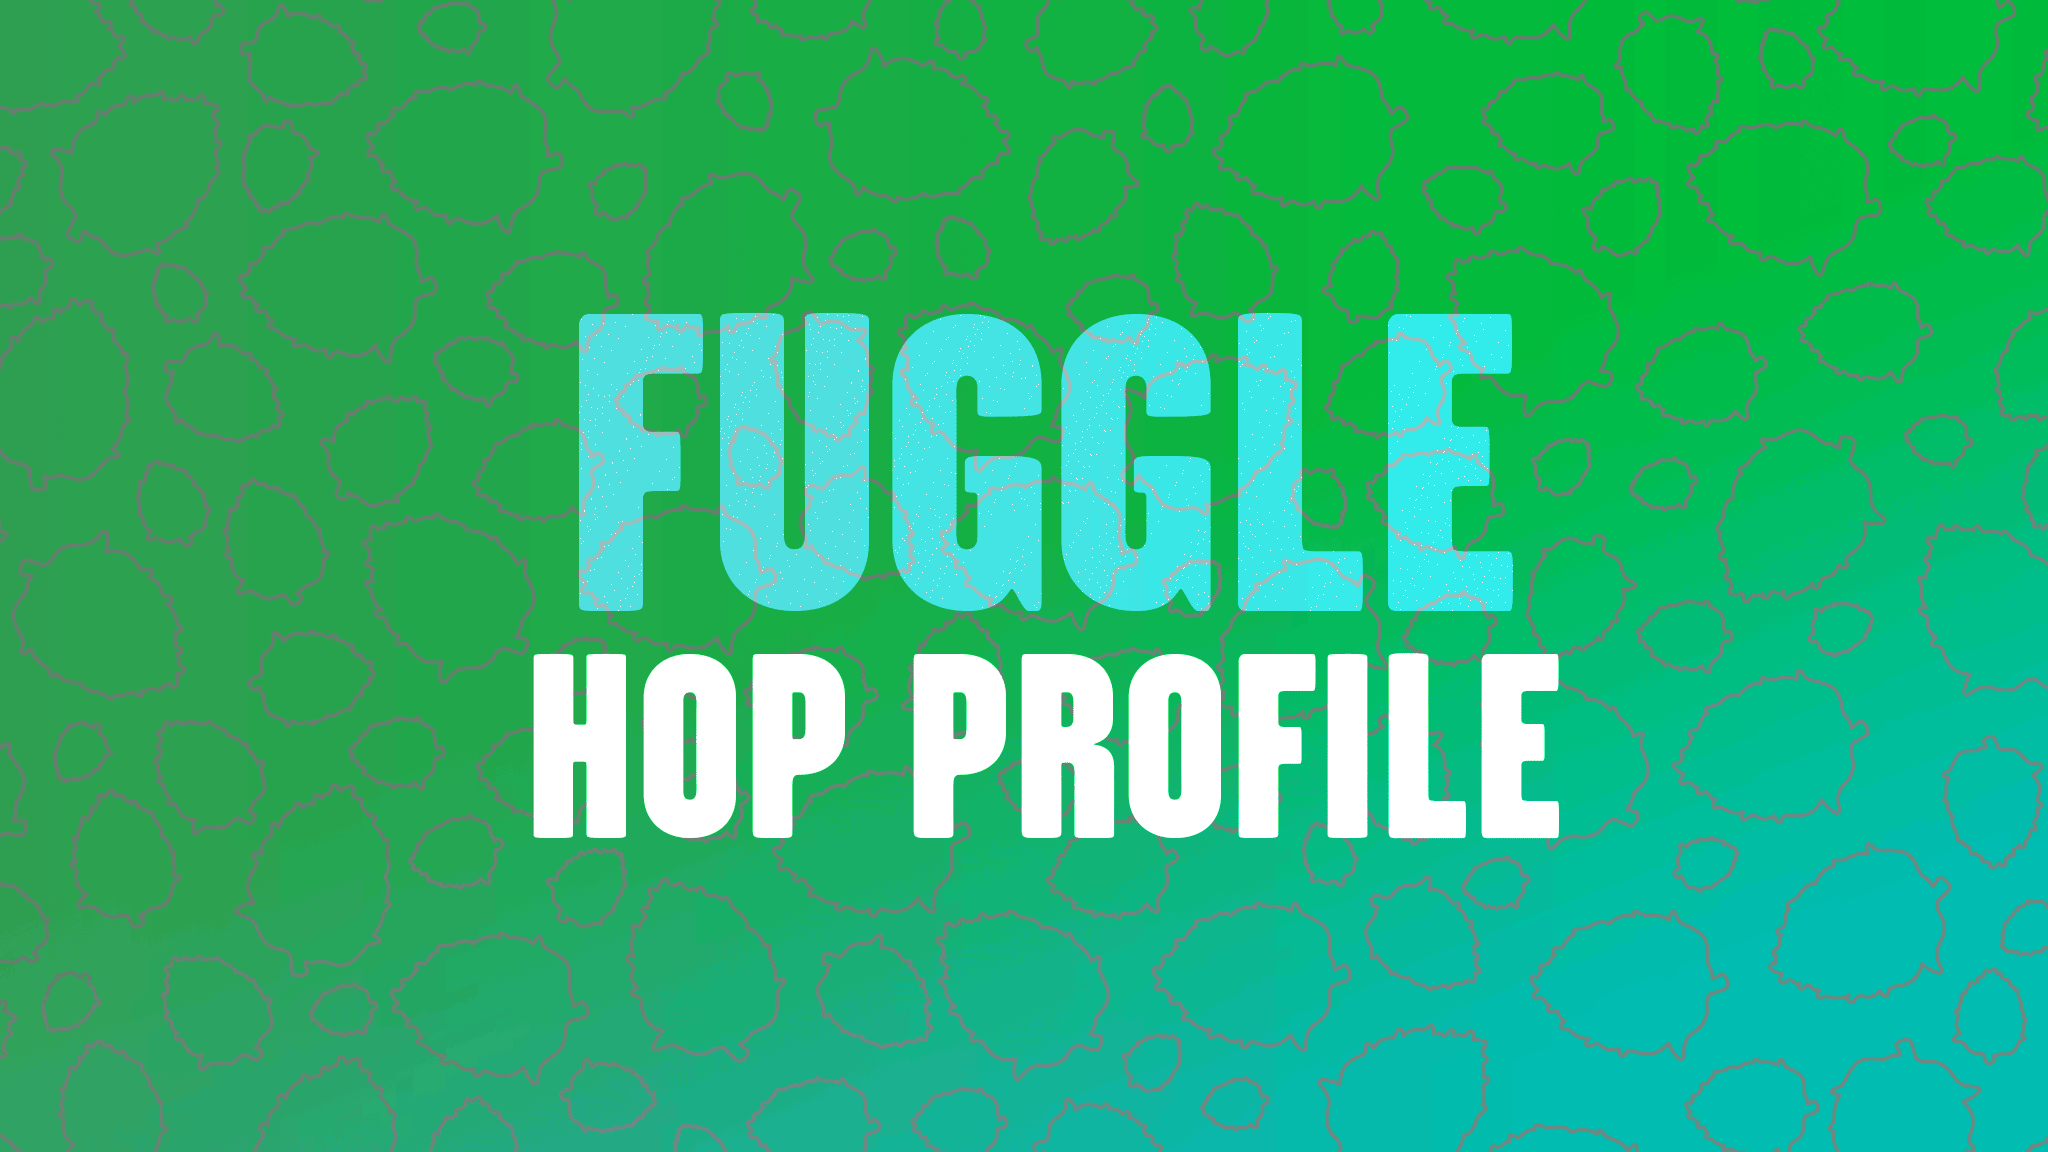 Hop Profile: Fuggle